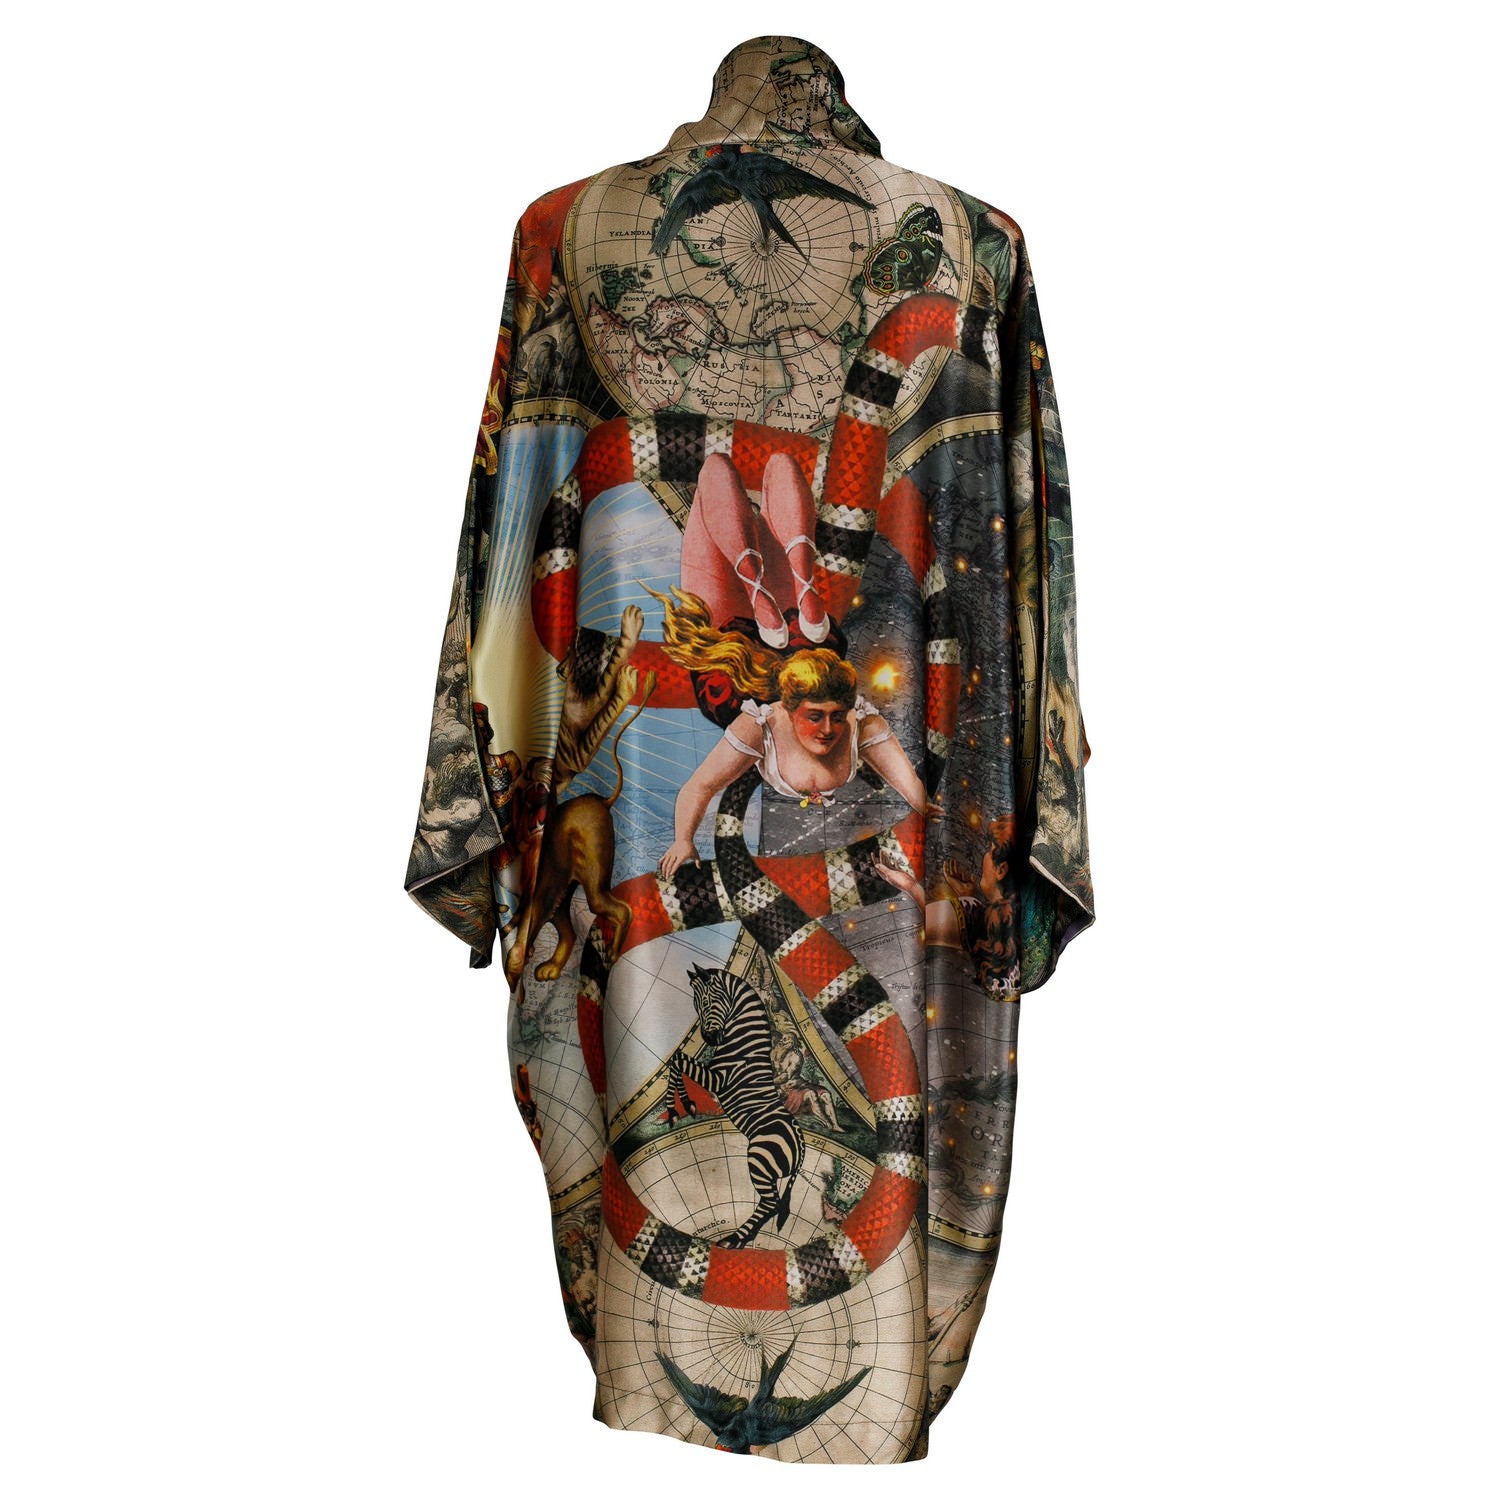 Back view of luxury 100% silk kimono in a maximalist Vintage Circus design